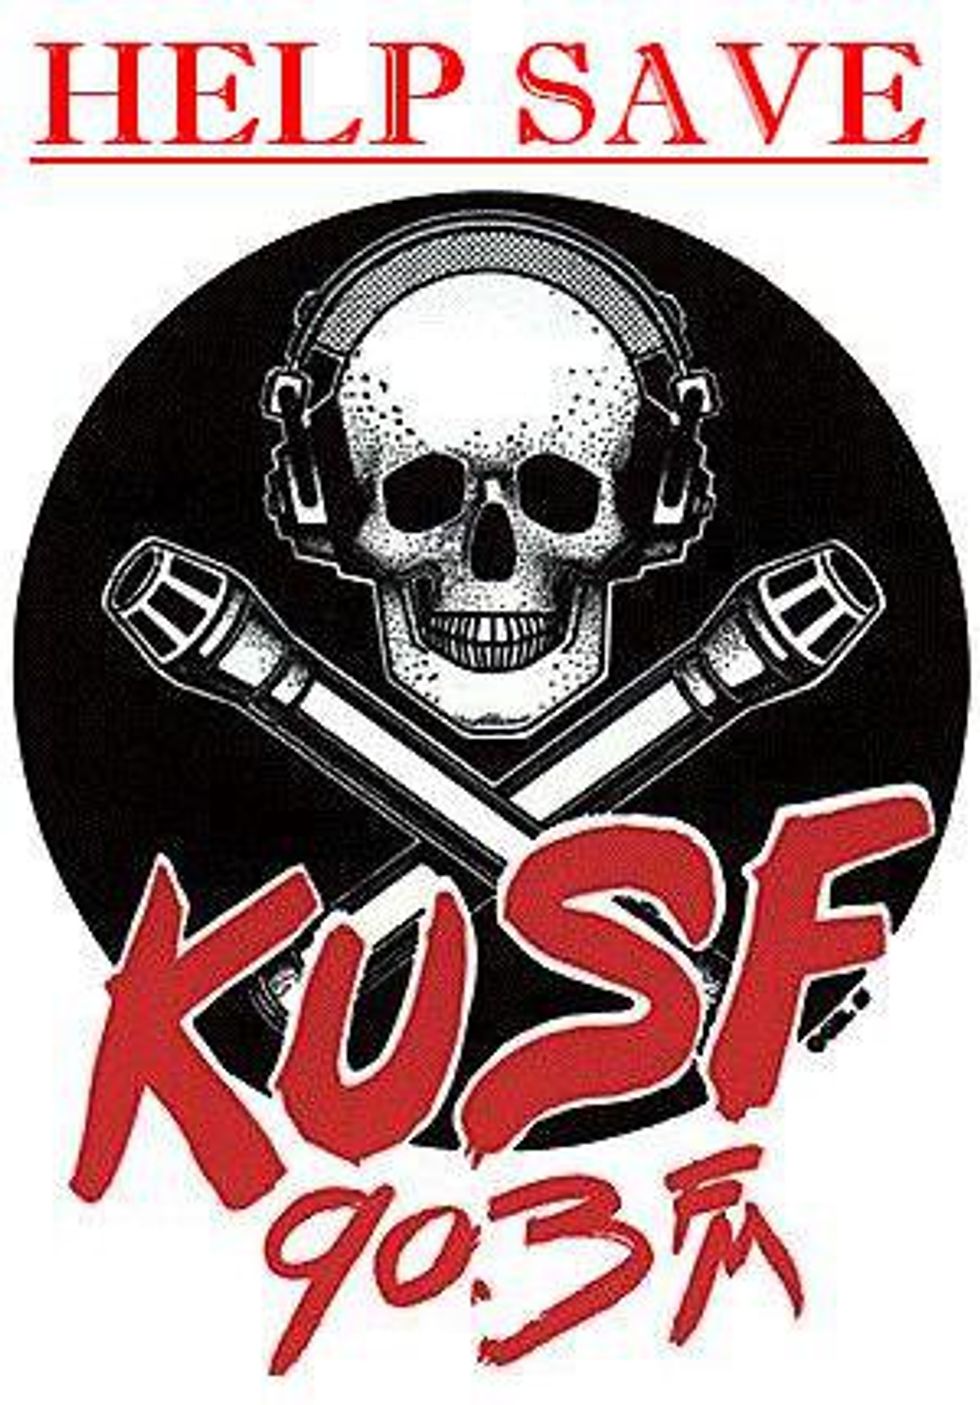 Community Meeting to Save KUSF Tonight